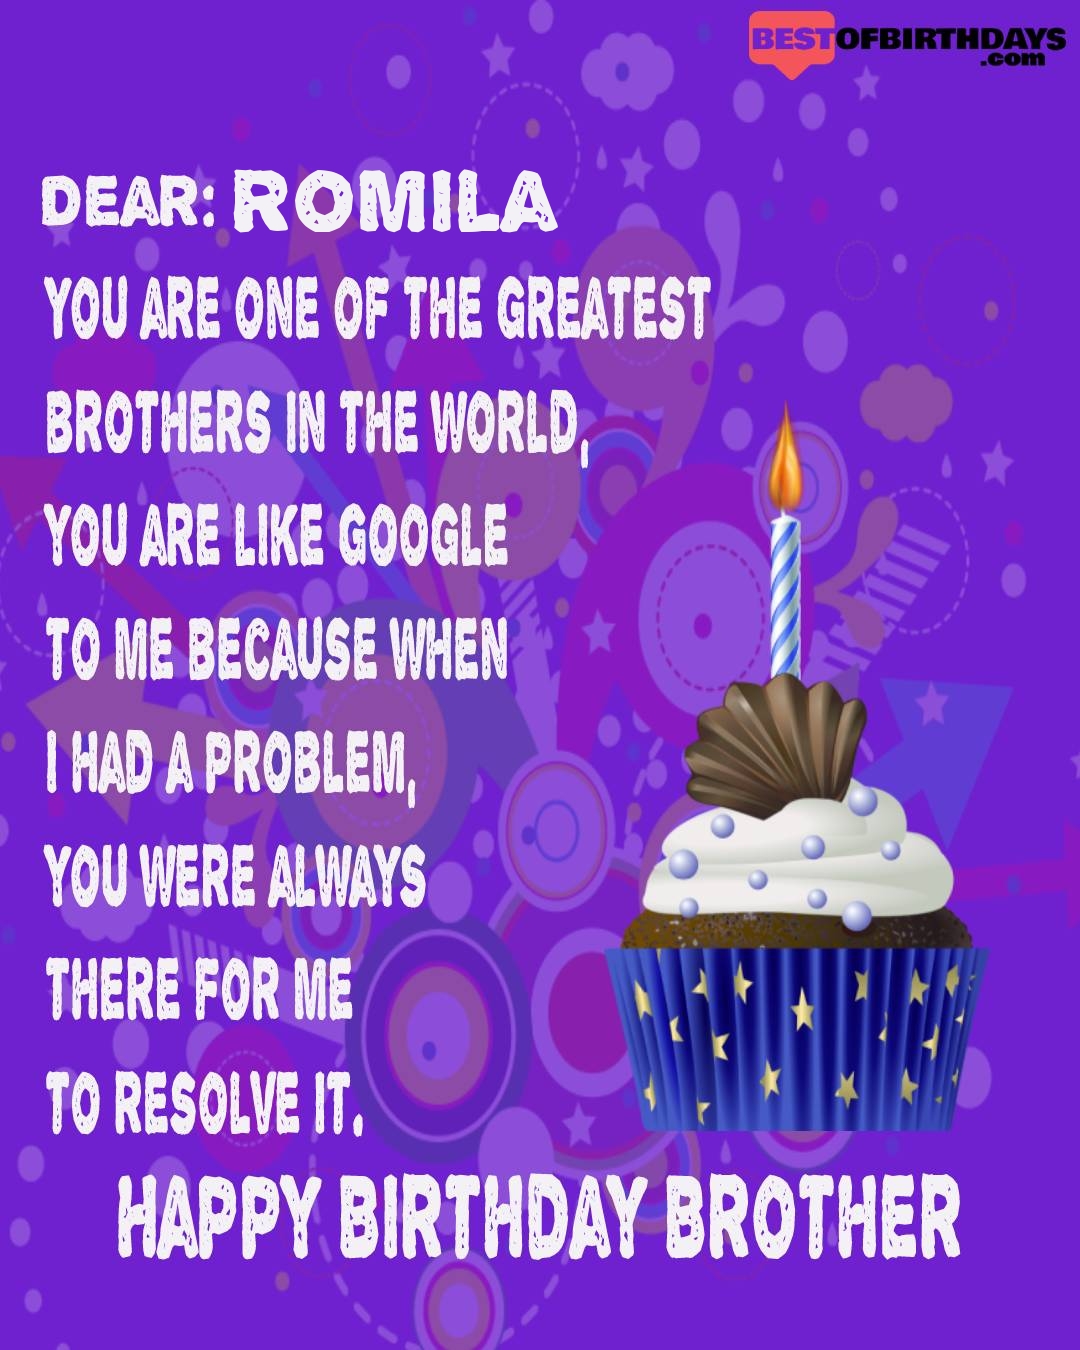 Happy birthday romila bhai brother bro